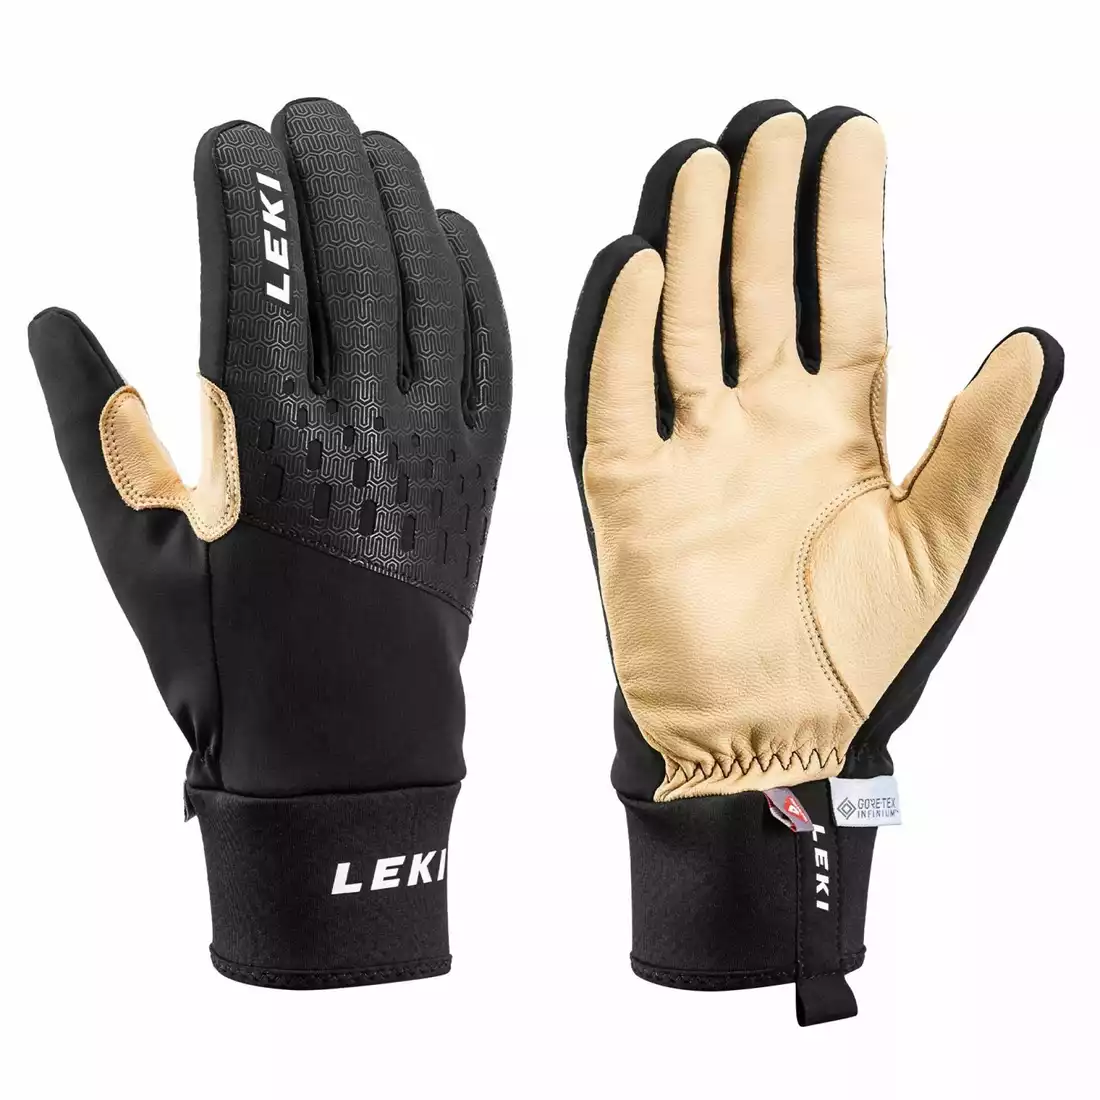 LEKI Nordic Thermo Premium winter gloves, black and beige